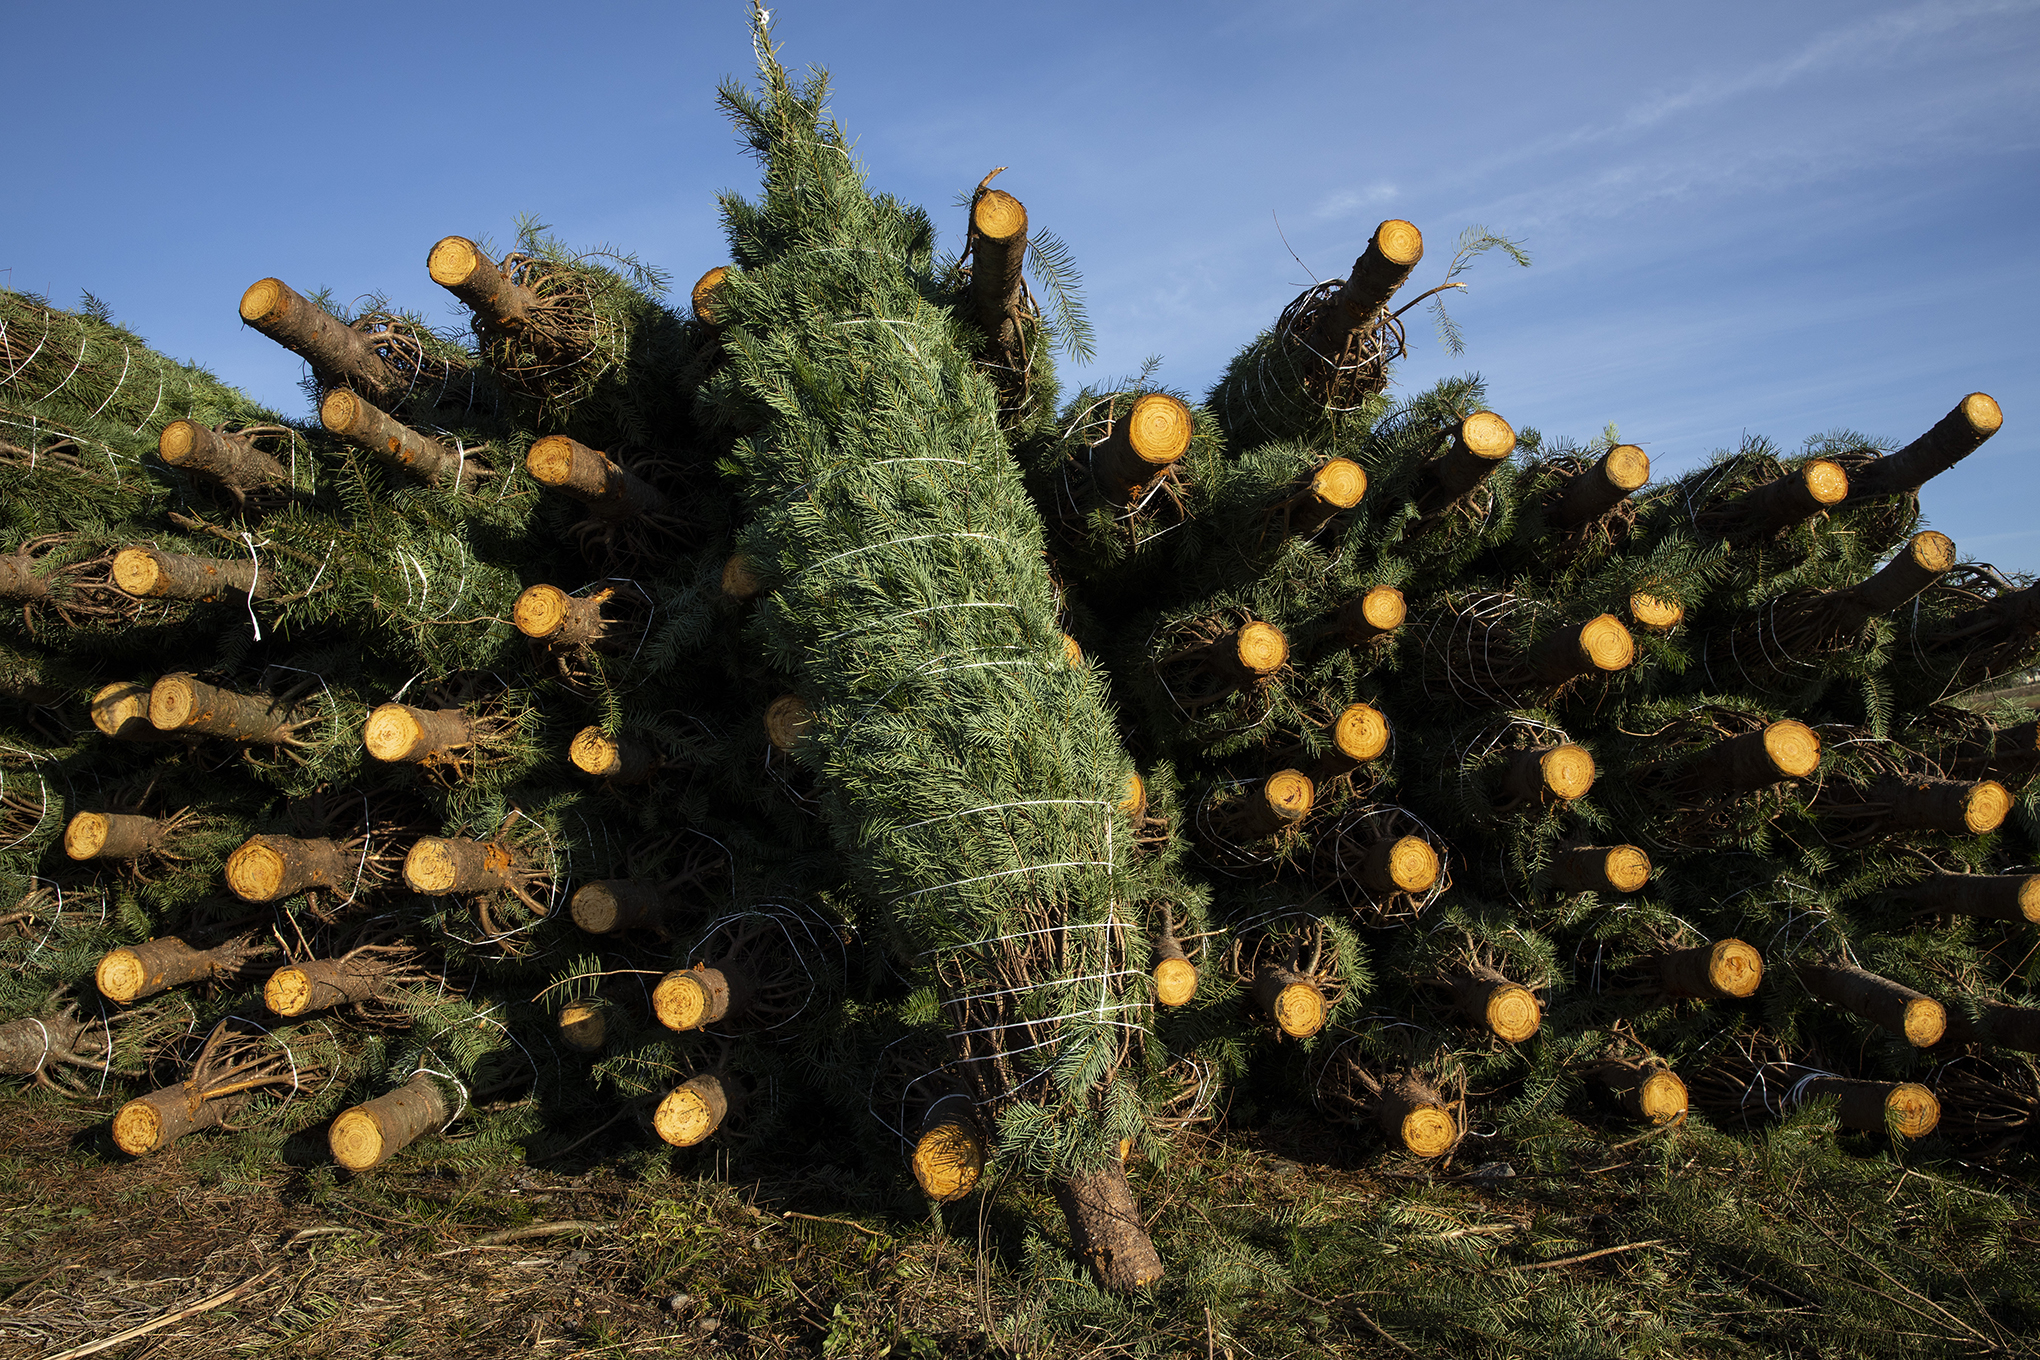 Freshly cut Christmas trees are bundled for shipment.